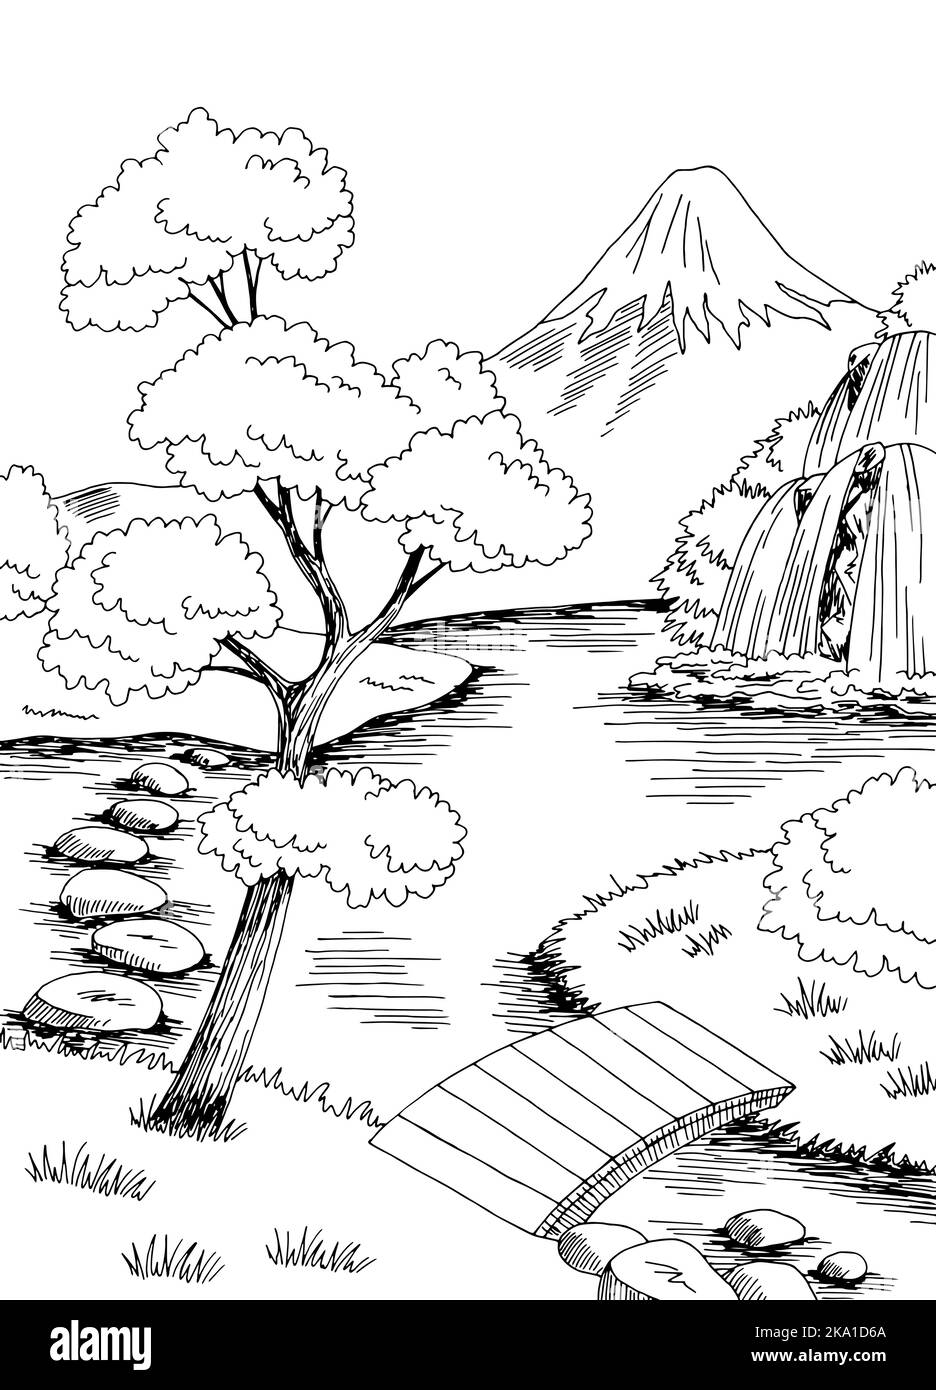 Japan Garten See Grafik schwarz weiß Landschaft Skizze vertikale Illustration Vektor Stock Vektor